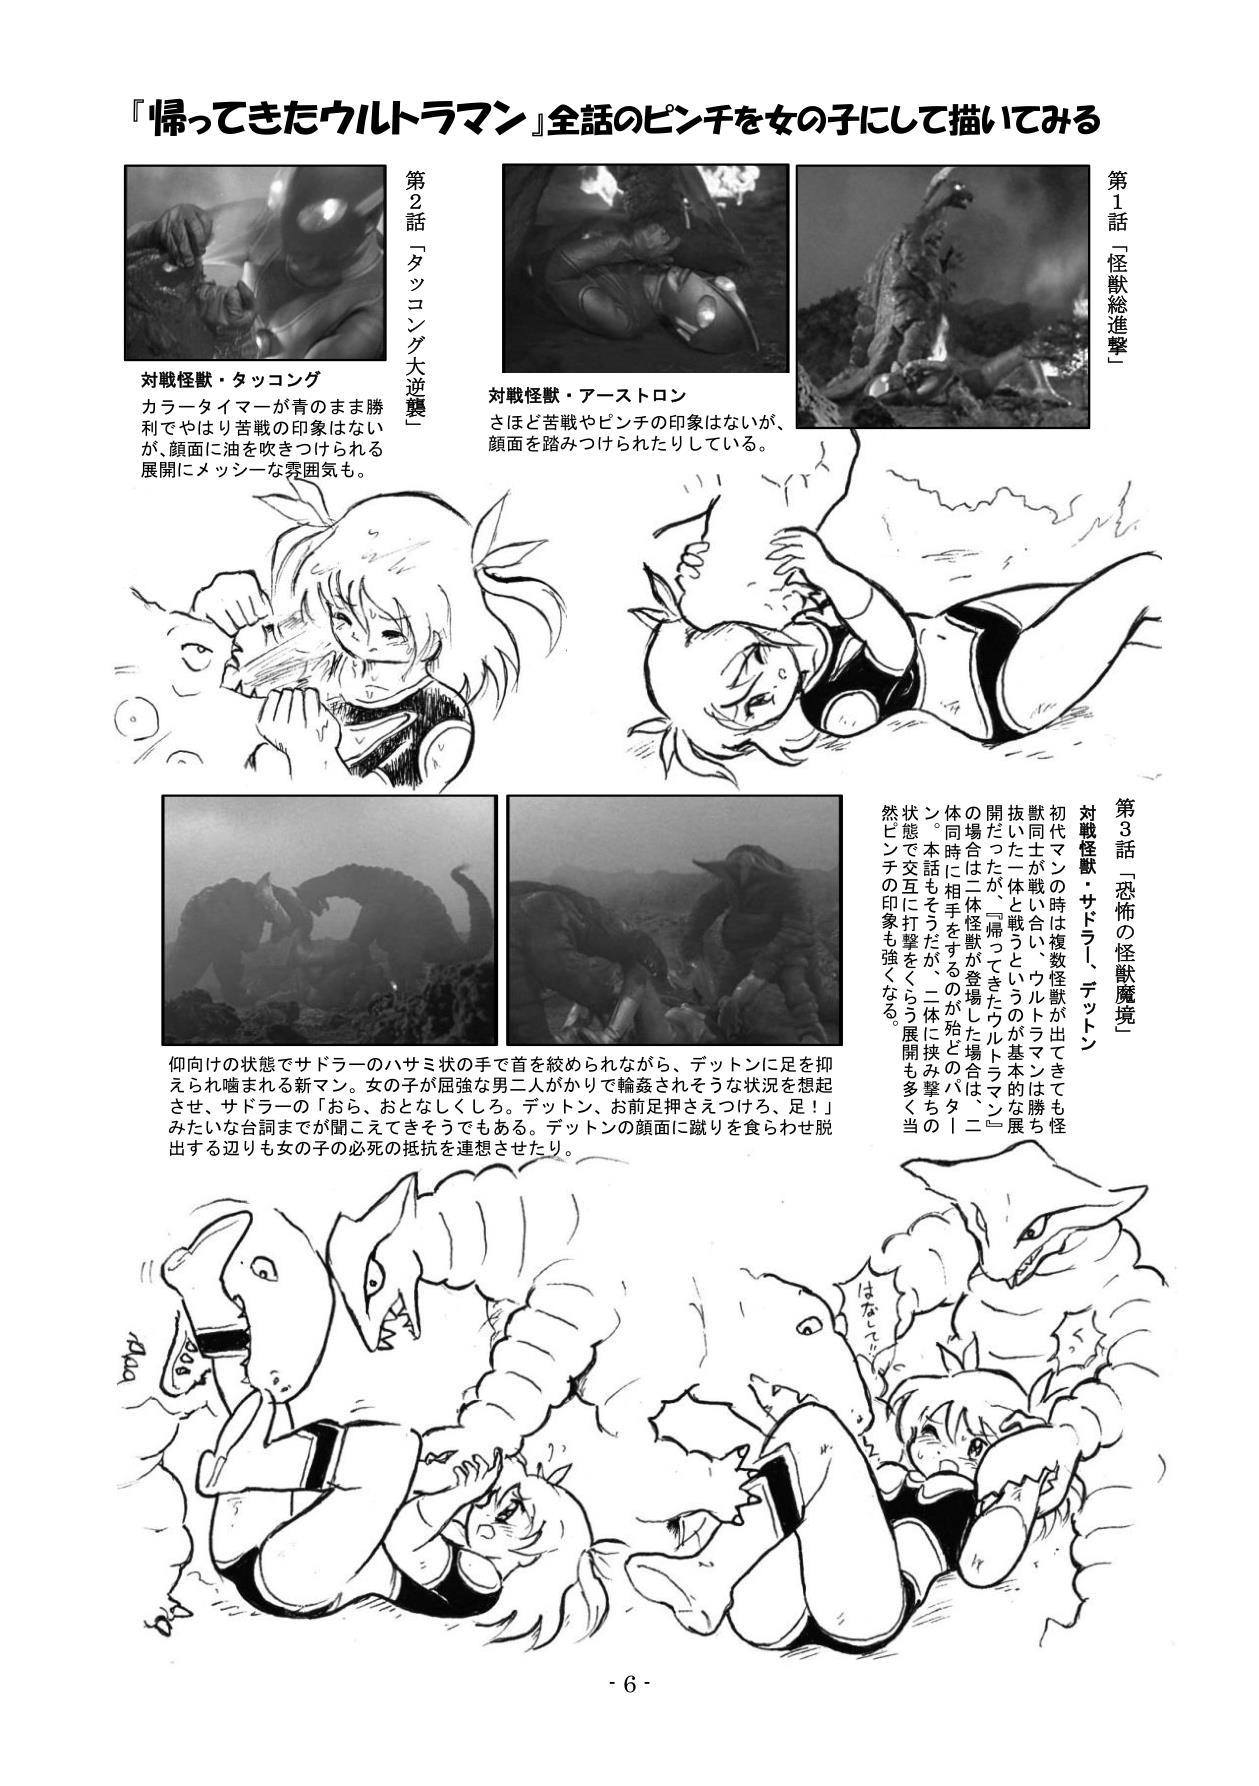 Pee Kaettekita Ultraman Musume Dai Pinch - Ultraman Parties - Page 5